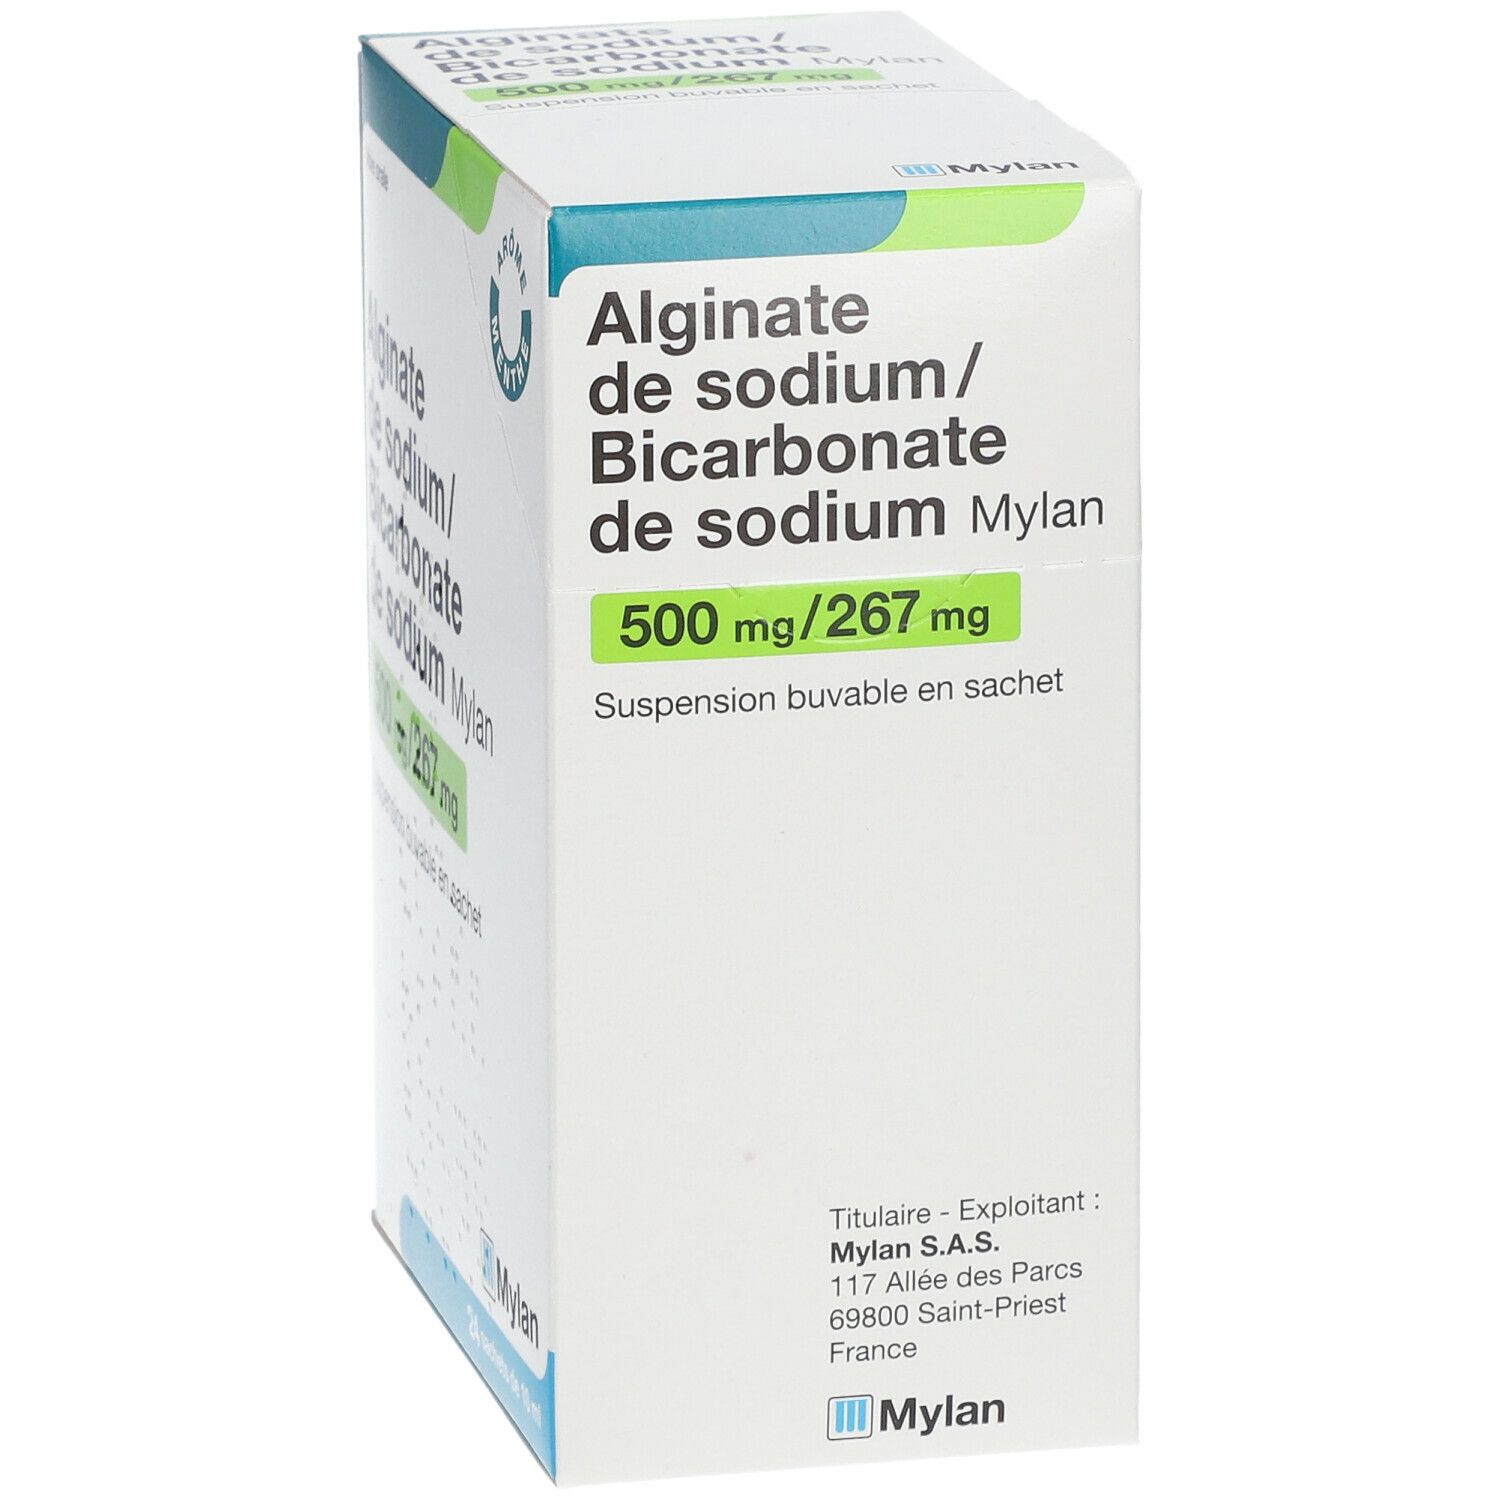 ALGINATE DE SODIUM /BICARBONATE DE SODIUM MYLAN 500 mg/267 mg